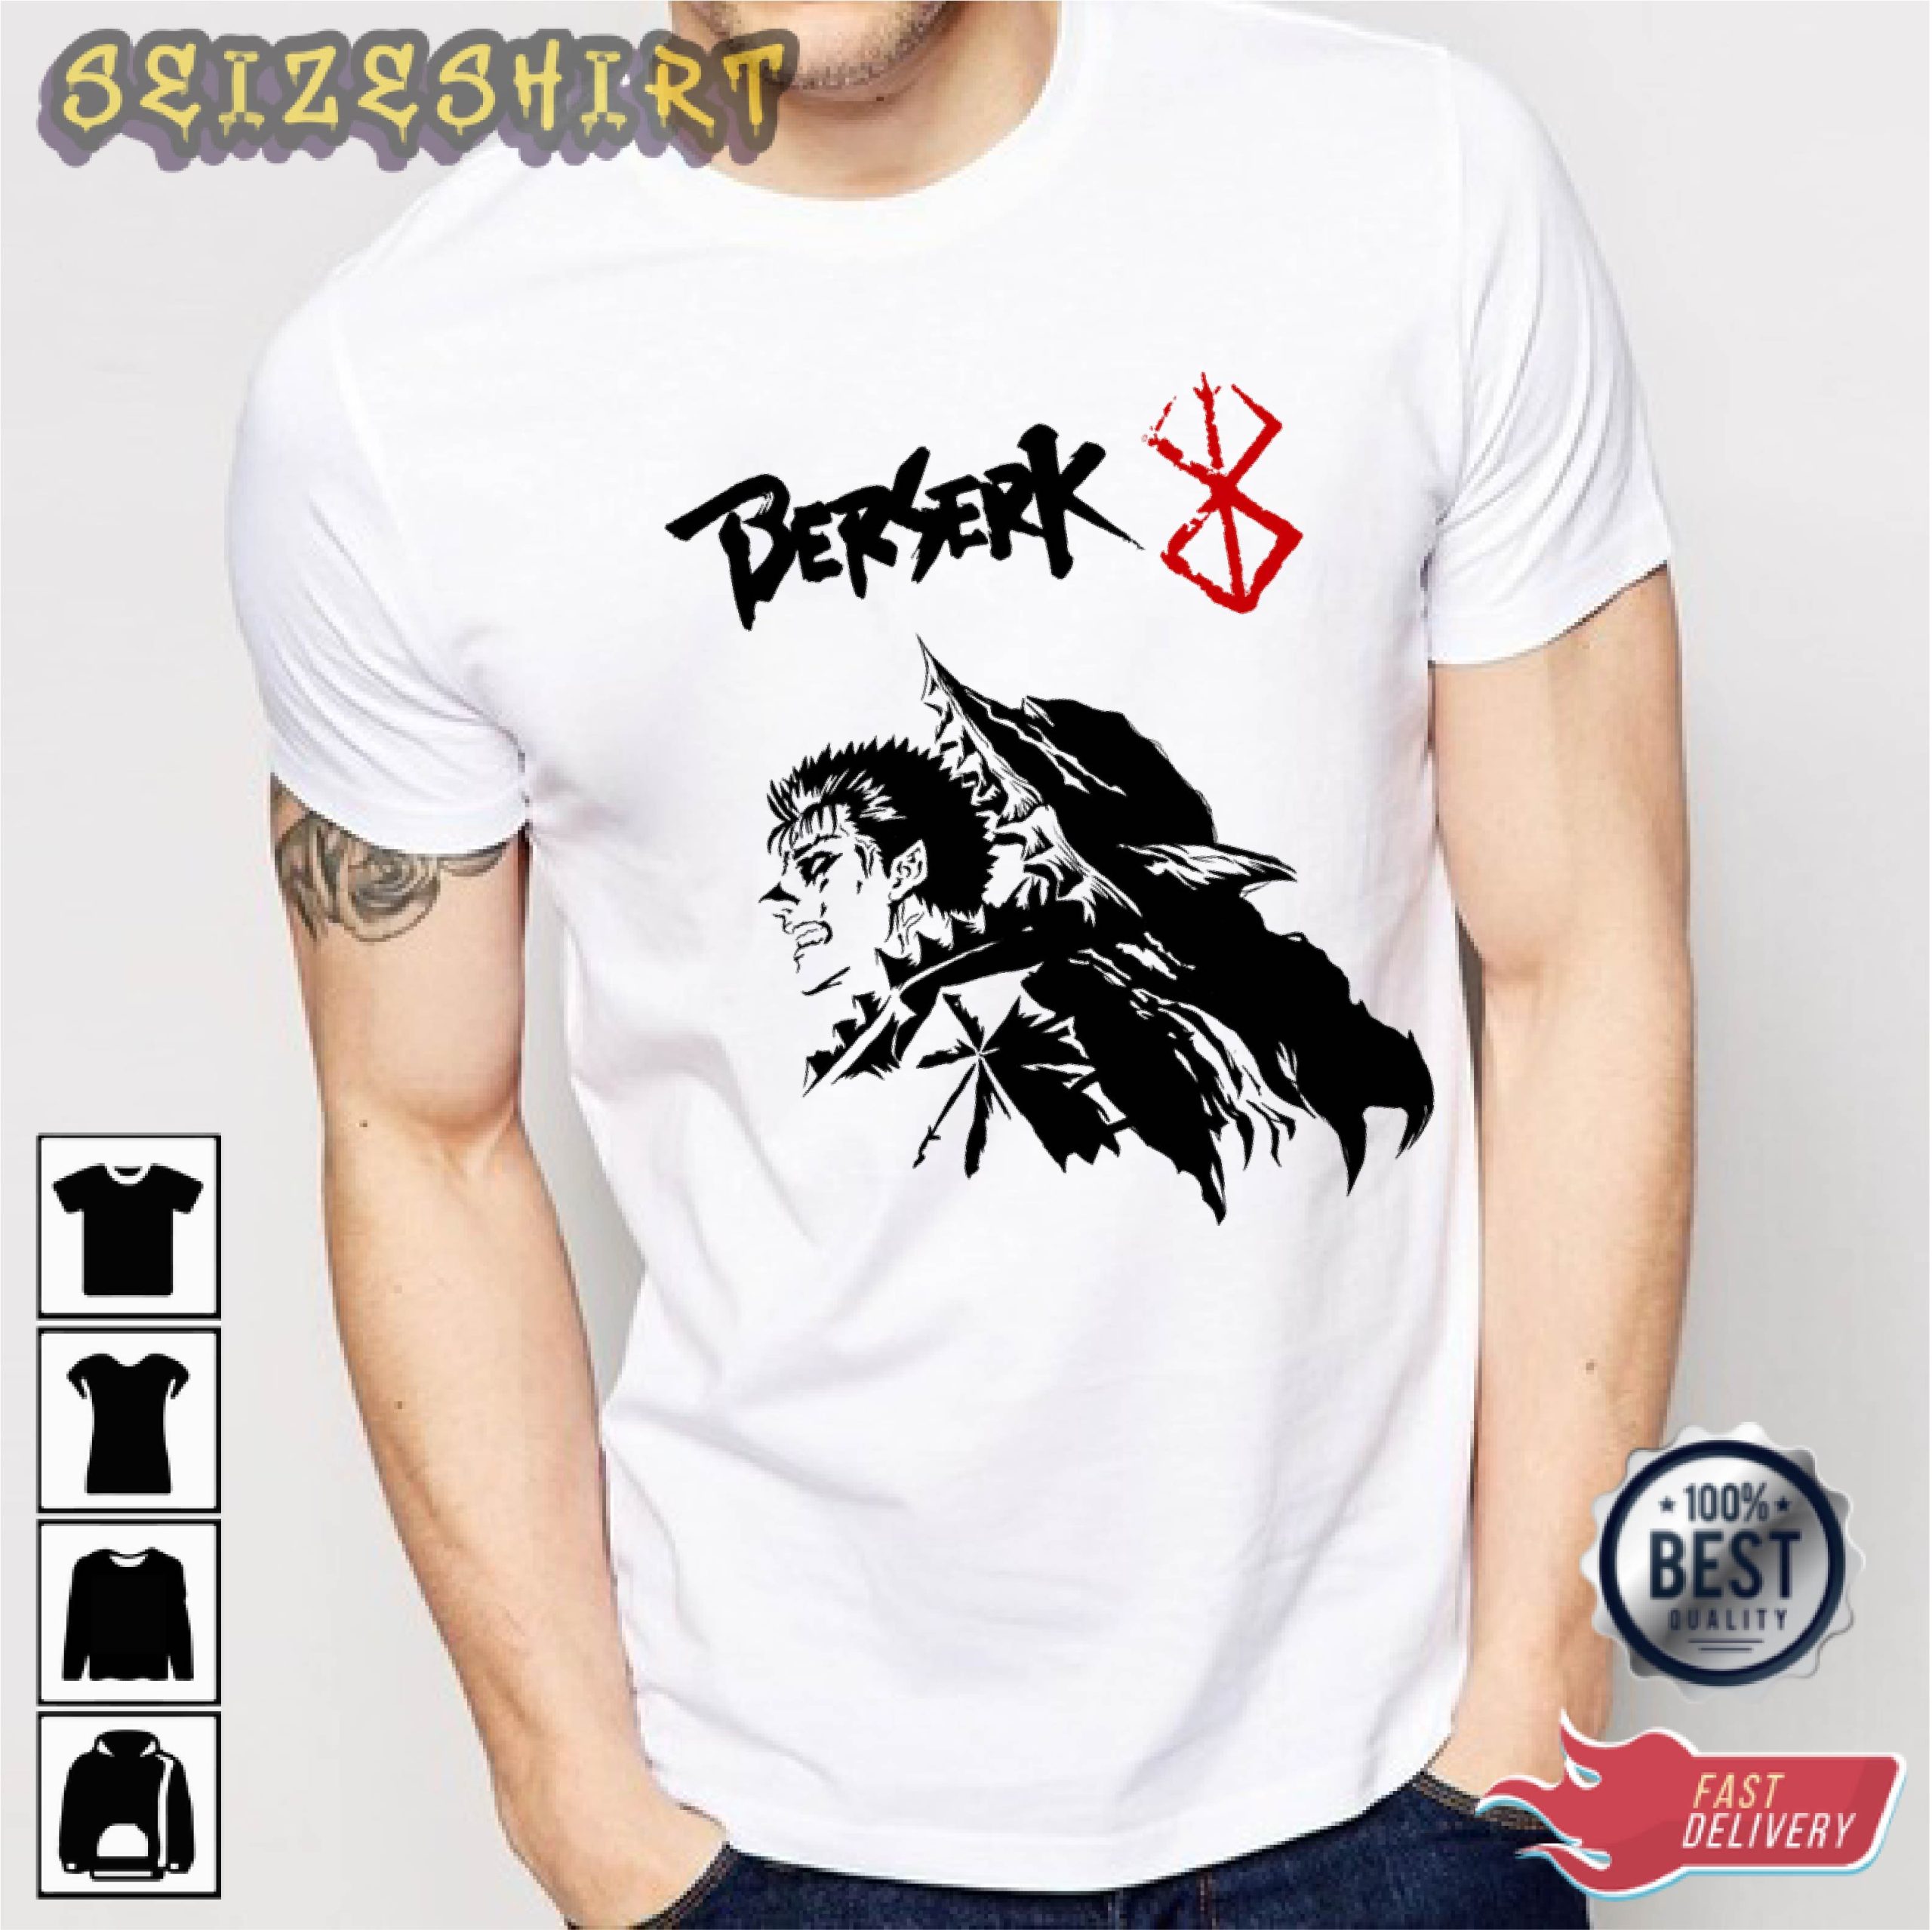 Berserk Skull Knight Graphic Shirt